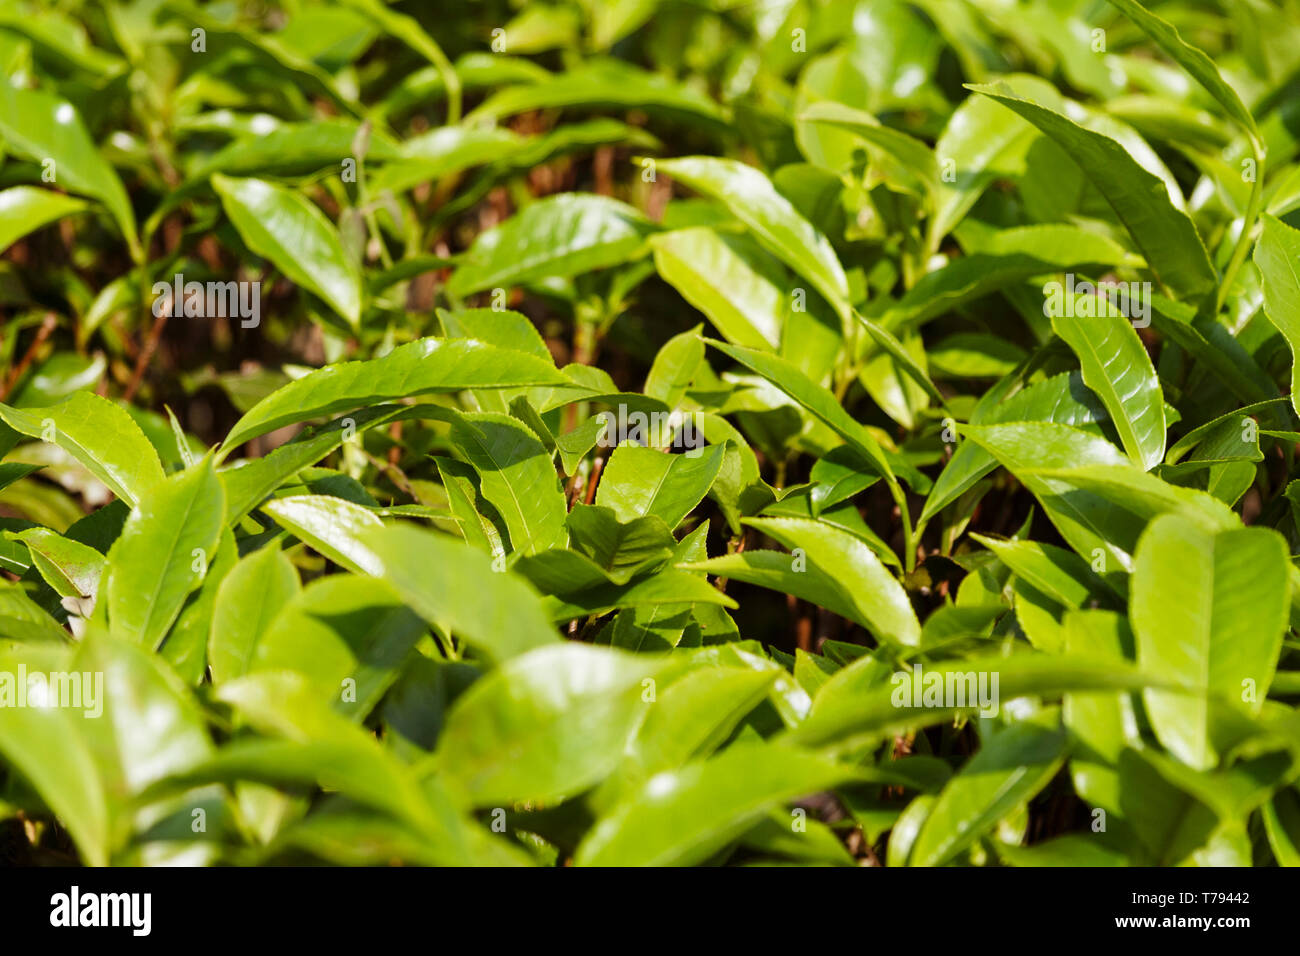 Jaflong, Sylhet, Bangladesh : Full frame of fresh tea leaves at Jaflong Tea Estate. Bangladesh is the 12th largest tea producer in the world. The indu Stock Photo